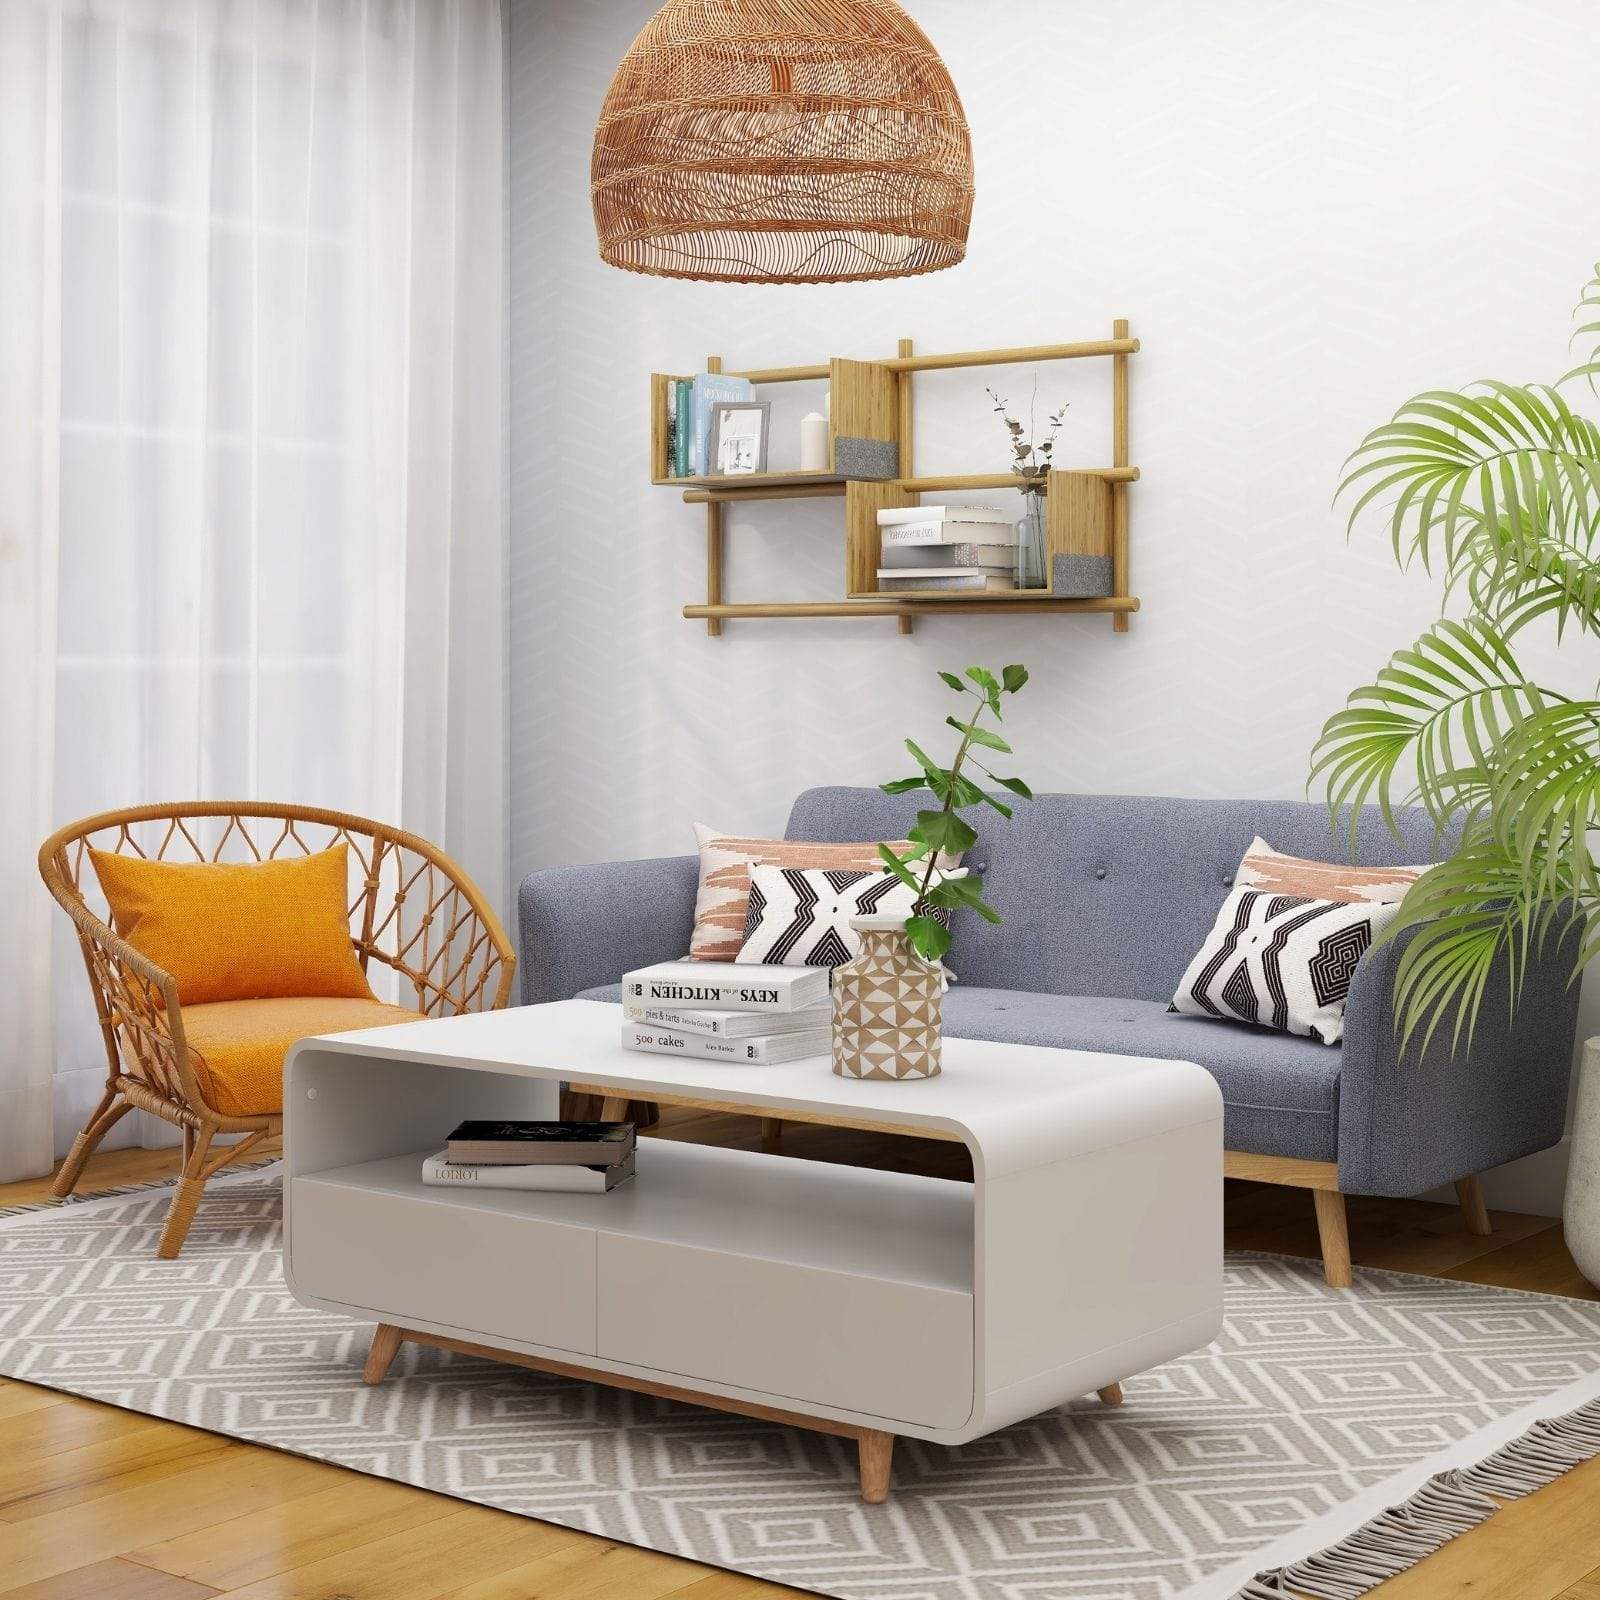 Nicholas 3-Seater Light Grey Foldable Sofa Bed - Newstart Furniture